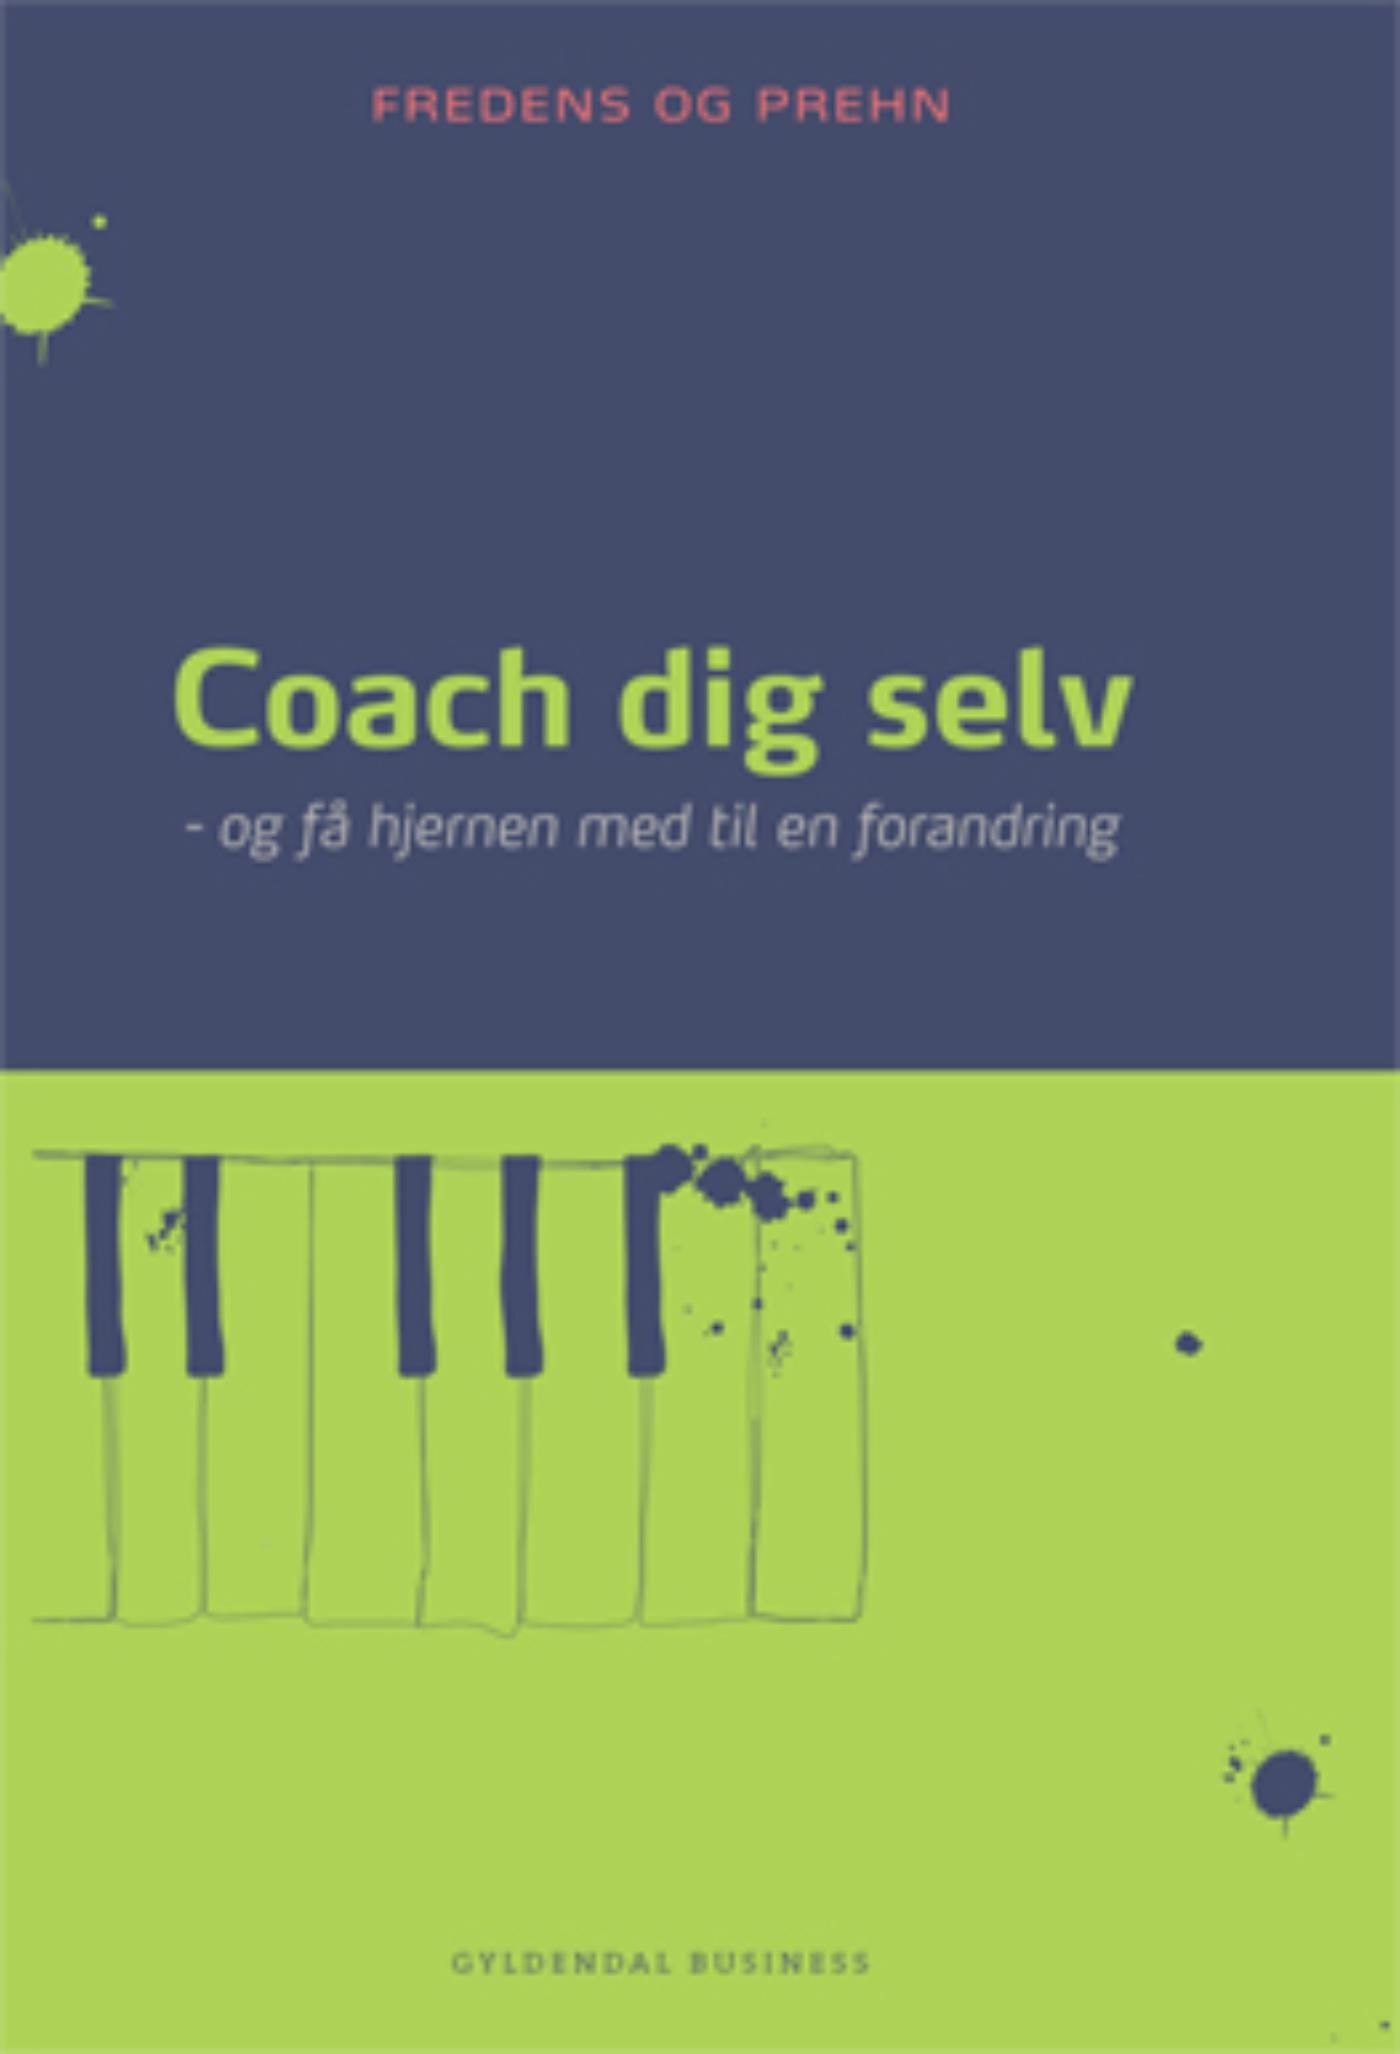 Coach dig selv, eBook by Kjeld Fredens, Anette Prehn